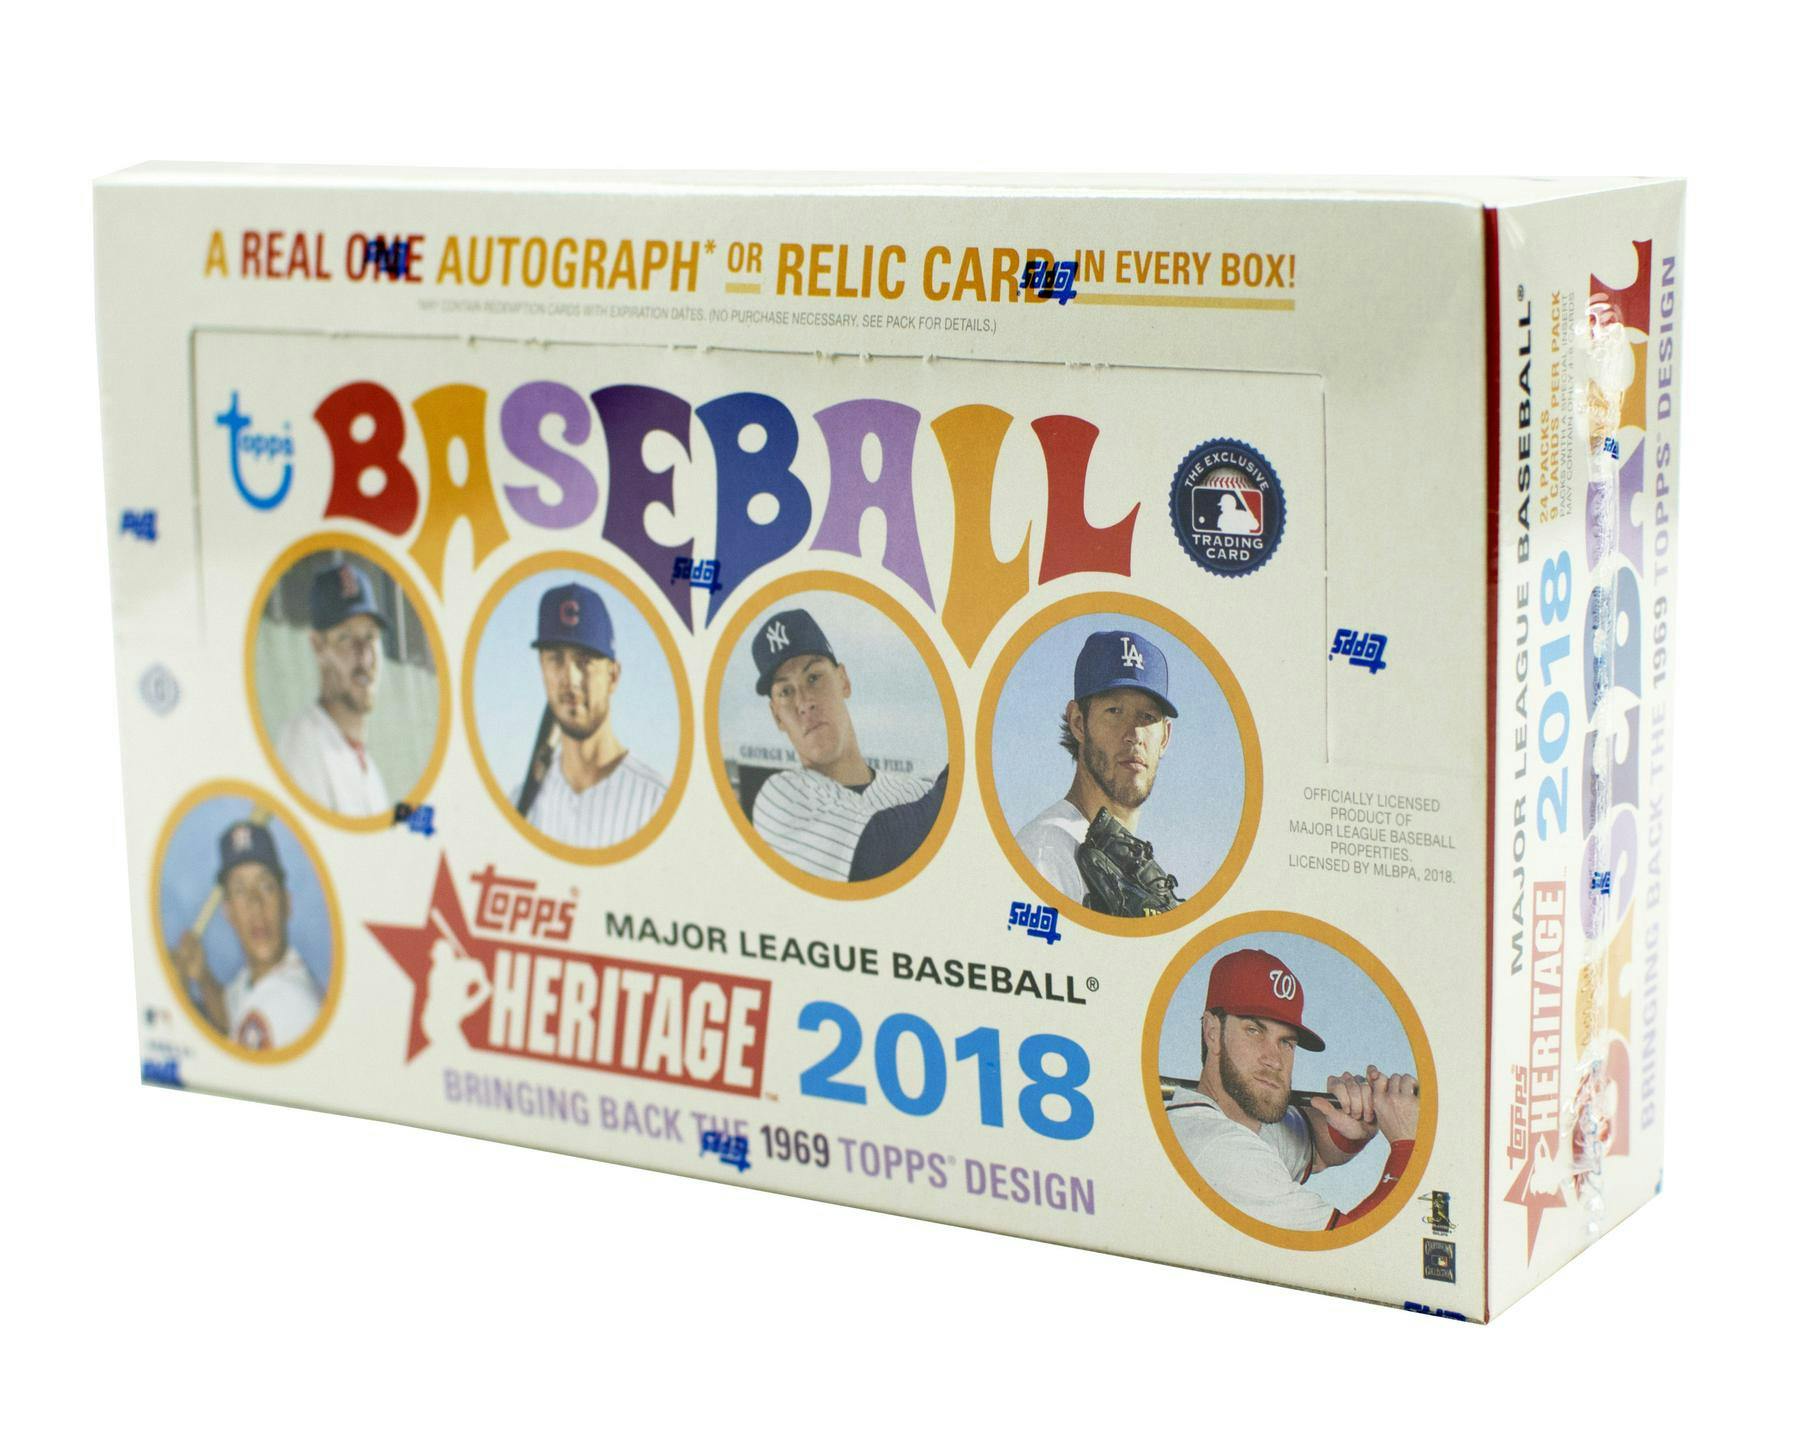 Mlb Topps 2018 Heritage Baseball Trading Card Hobby Box